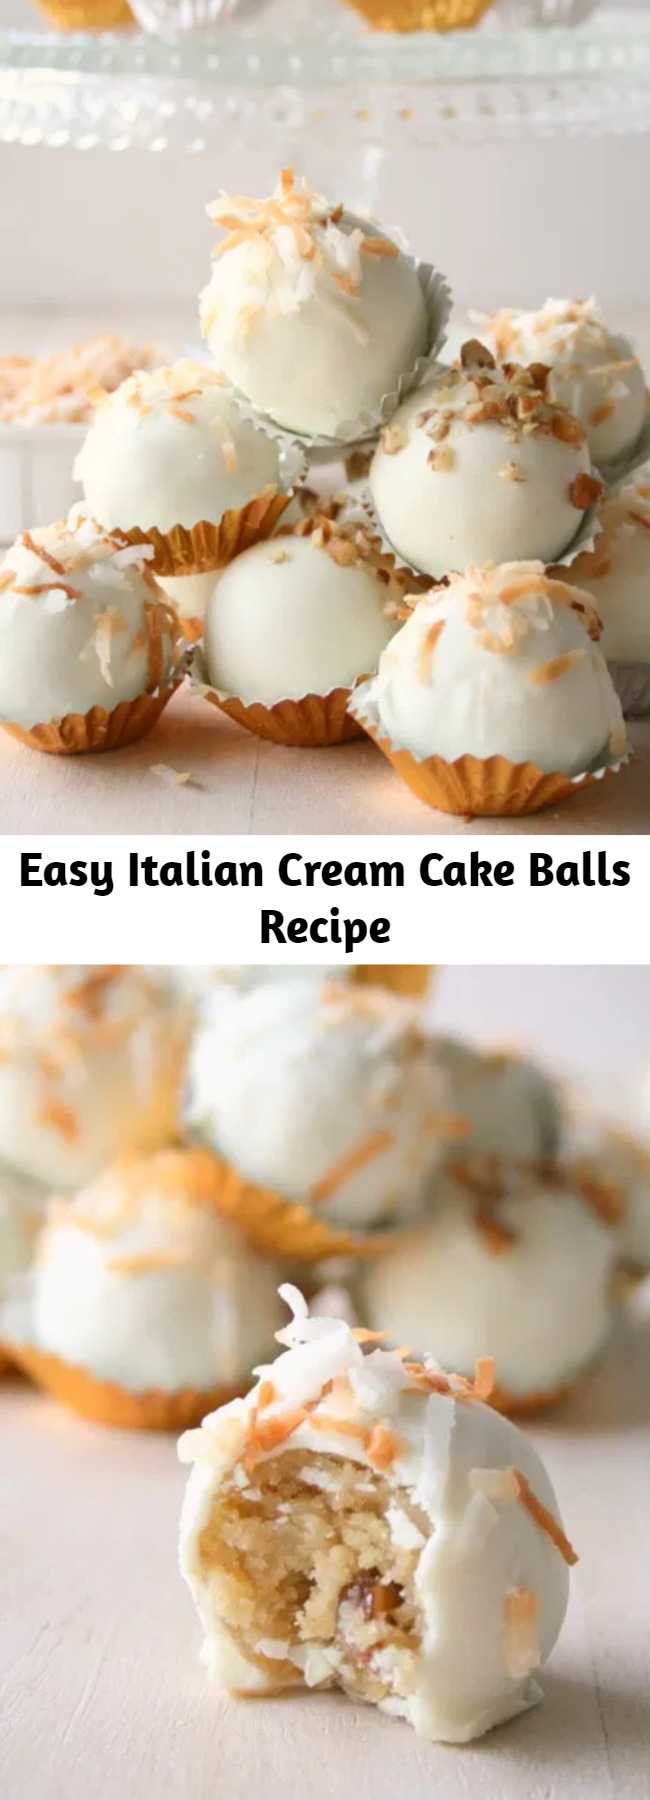 Easy Italian Cream Cake Balls Recipe - Italian Cream Cake Bites: Like Oreo balls and cake balls, but better because it's an Italian dessert!